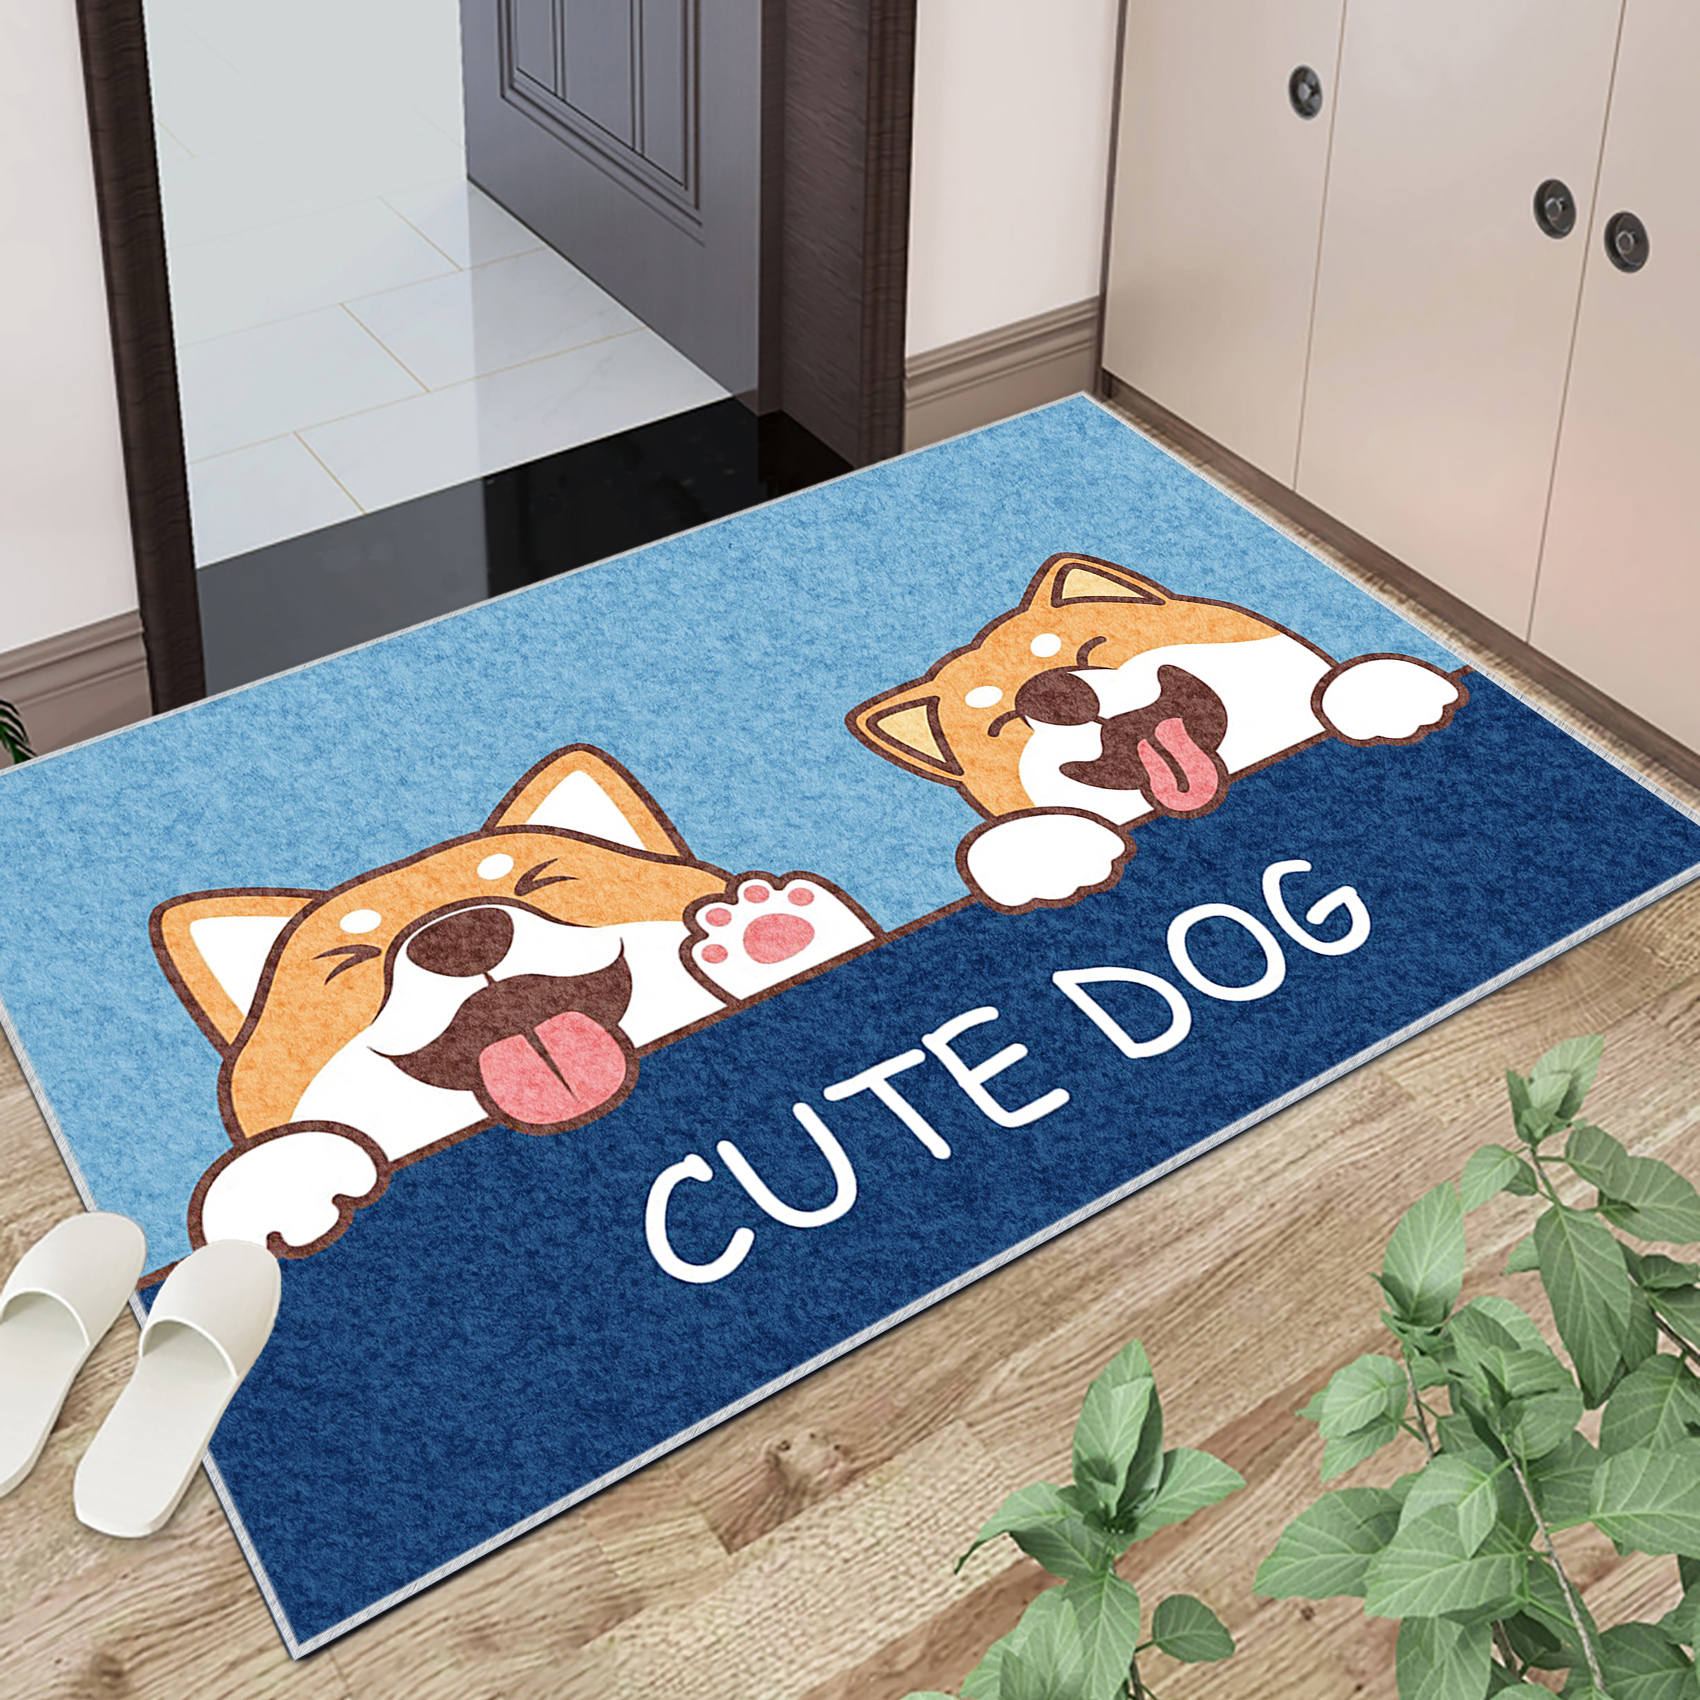 Soft Door Mat for Indoor/Outdoor Use Nayothecorgi Sleeping Corgi Door Mat Non Slip Mat for Bathroom Floor Corgi Dog Printed Black Door Mat for Dog Lovers 24” x 15.5” x 0.25 